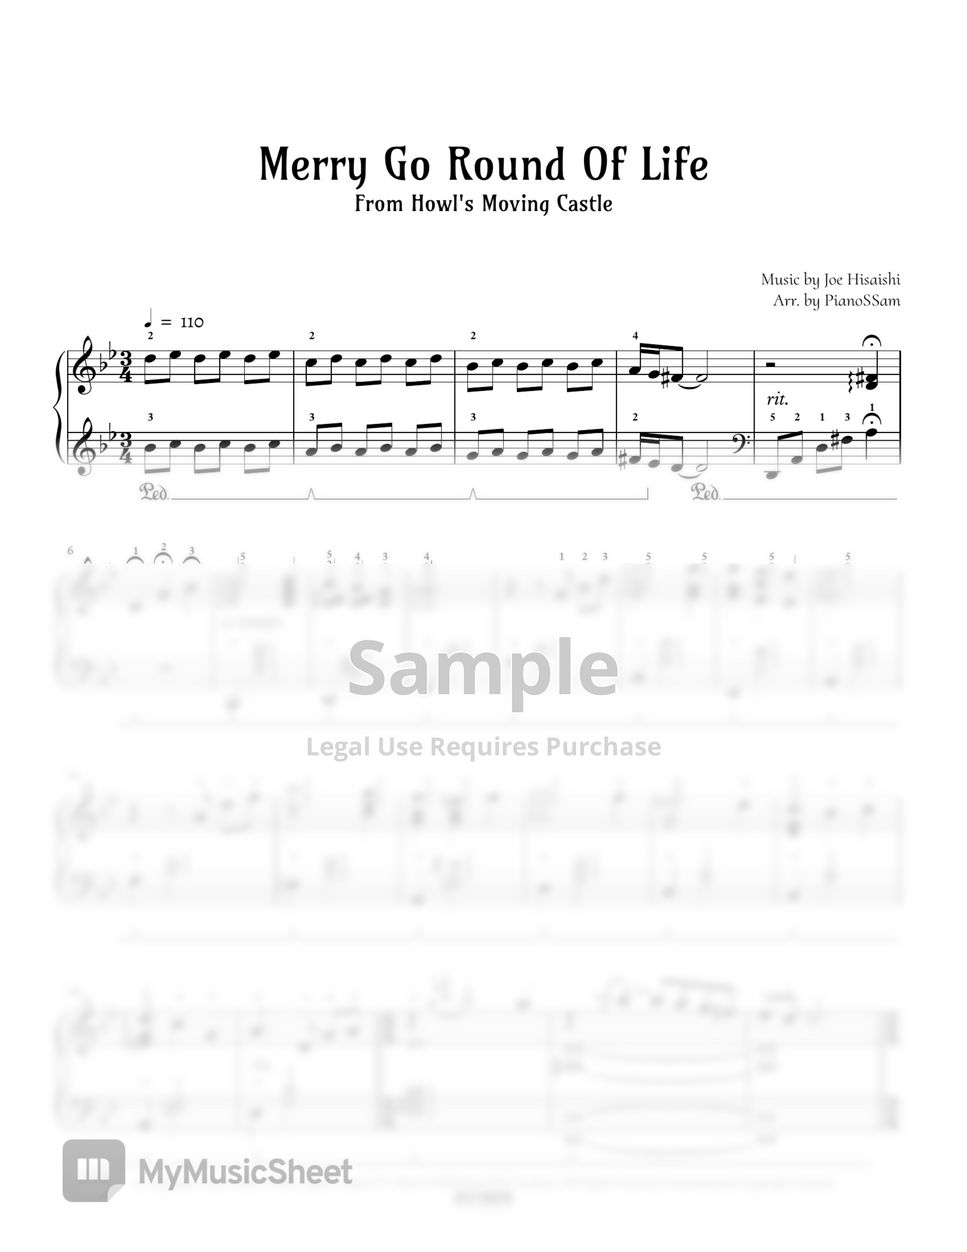 Joe Hisaishi - [Advanced] Merry go round of life(인생의 회전목마) | Piano Arrangement (하울의 움직이는 성) by PianoSSam